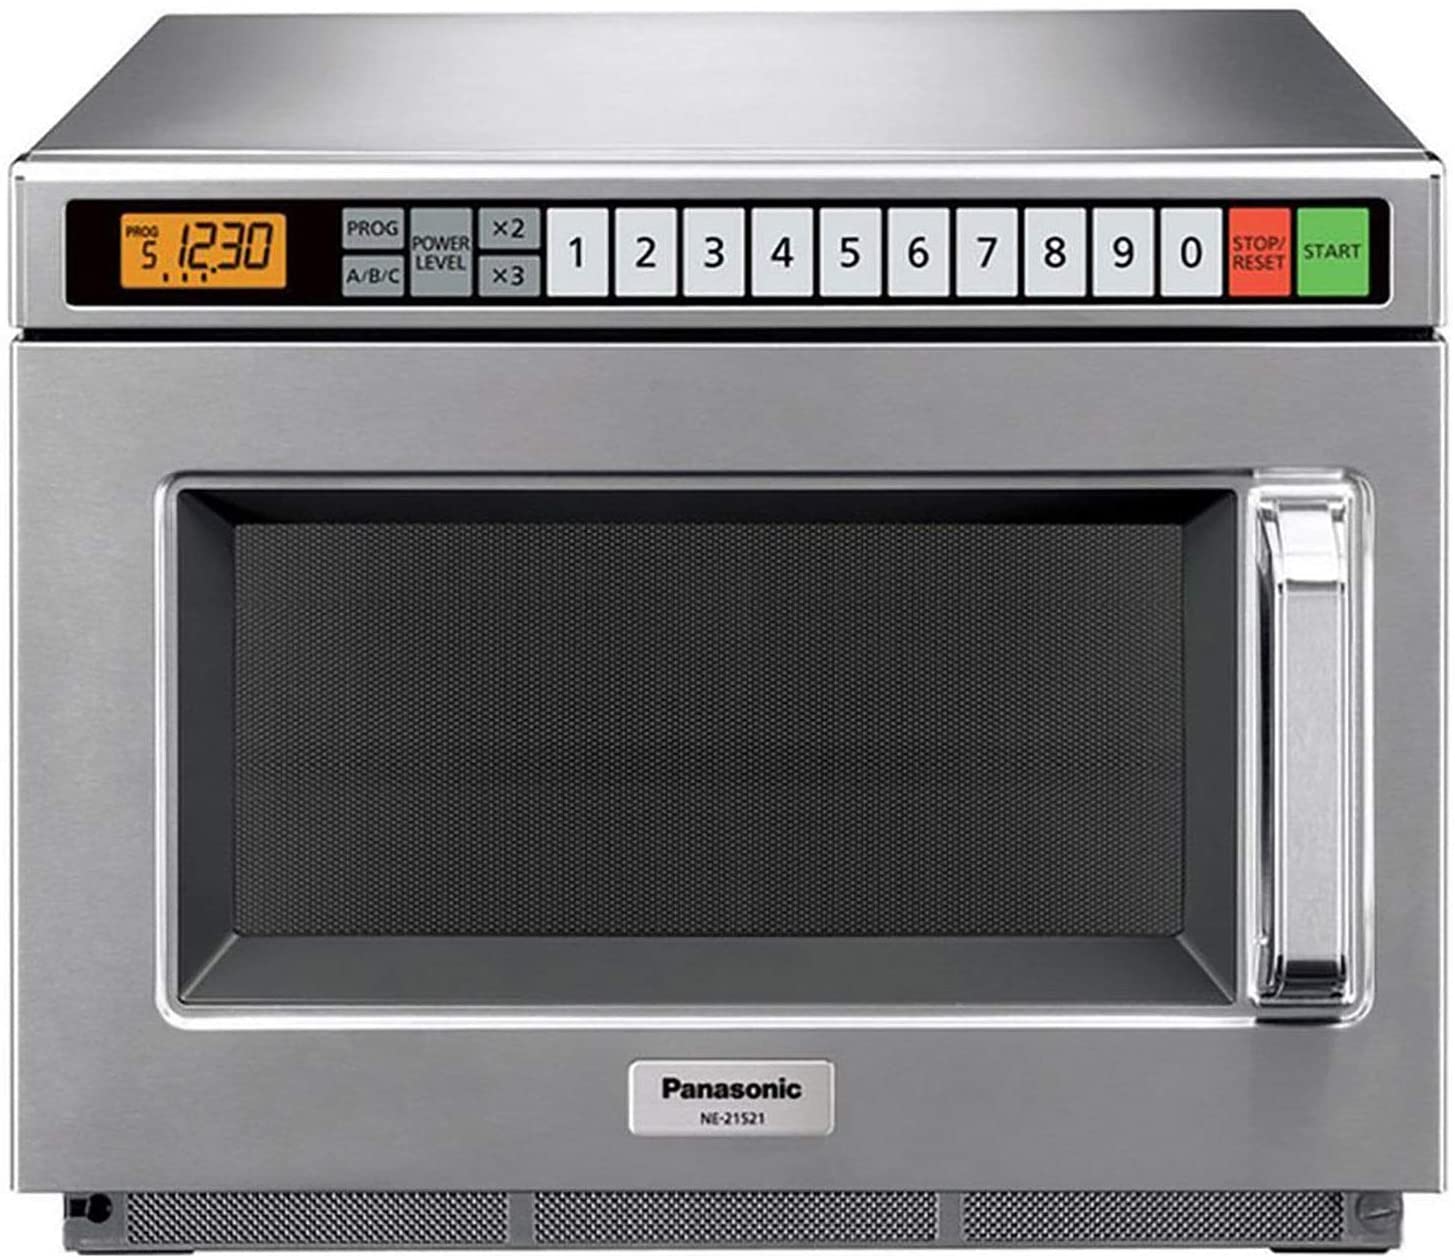 panasonic-commercial-microwave